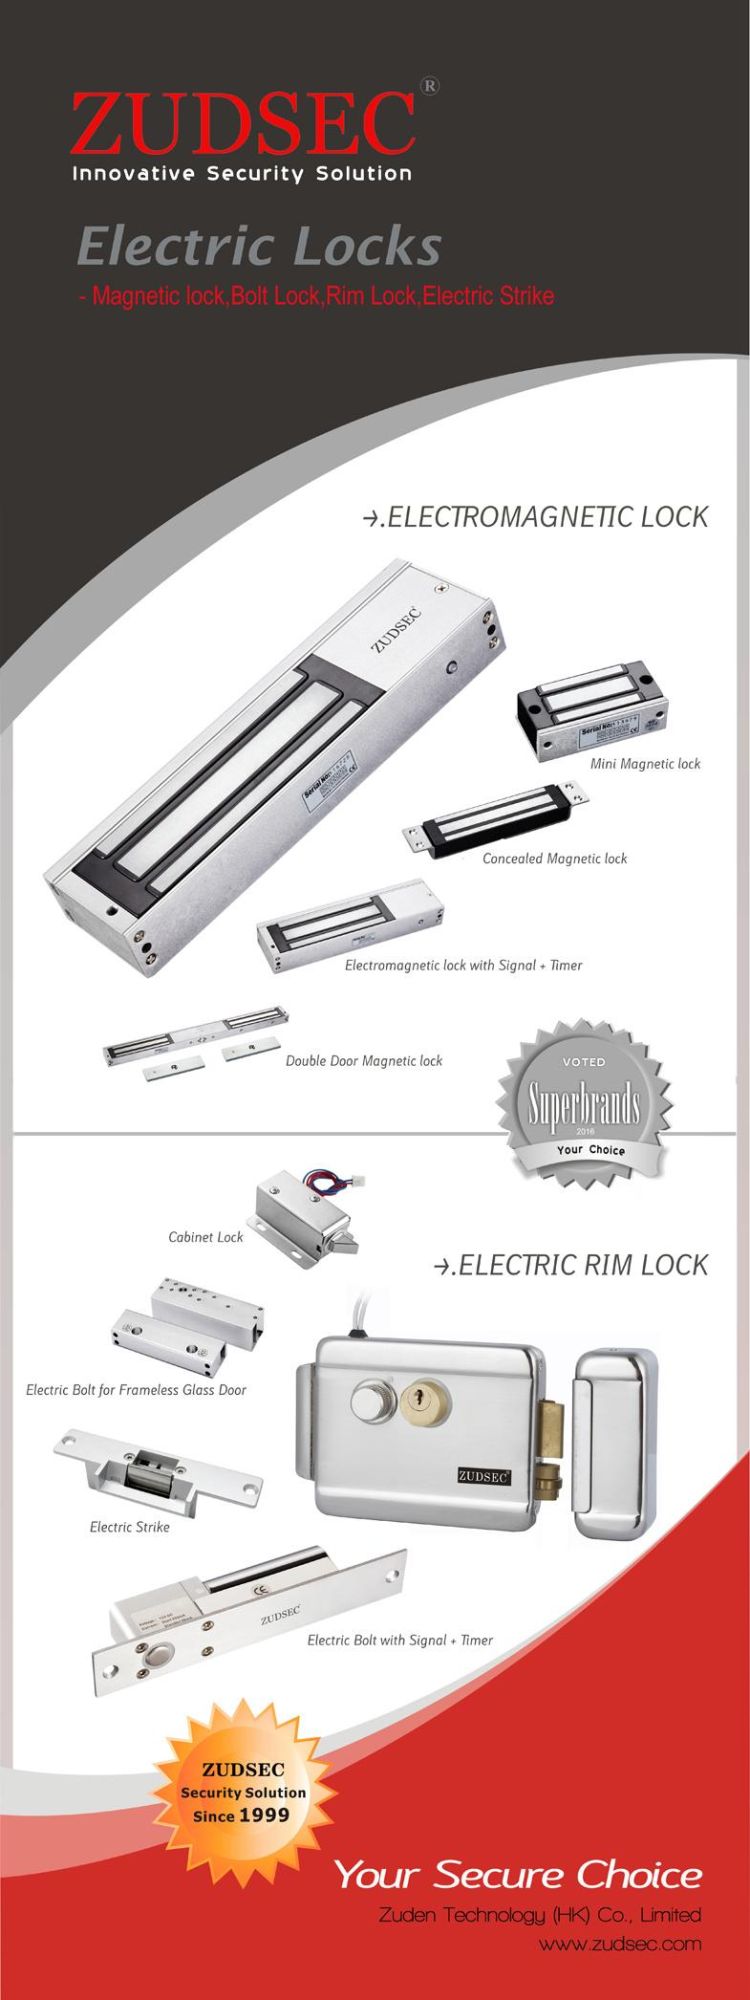 Zl Metal Bracket for Magnetic Lock